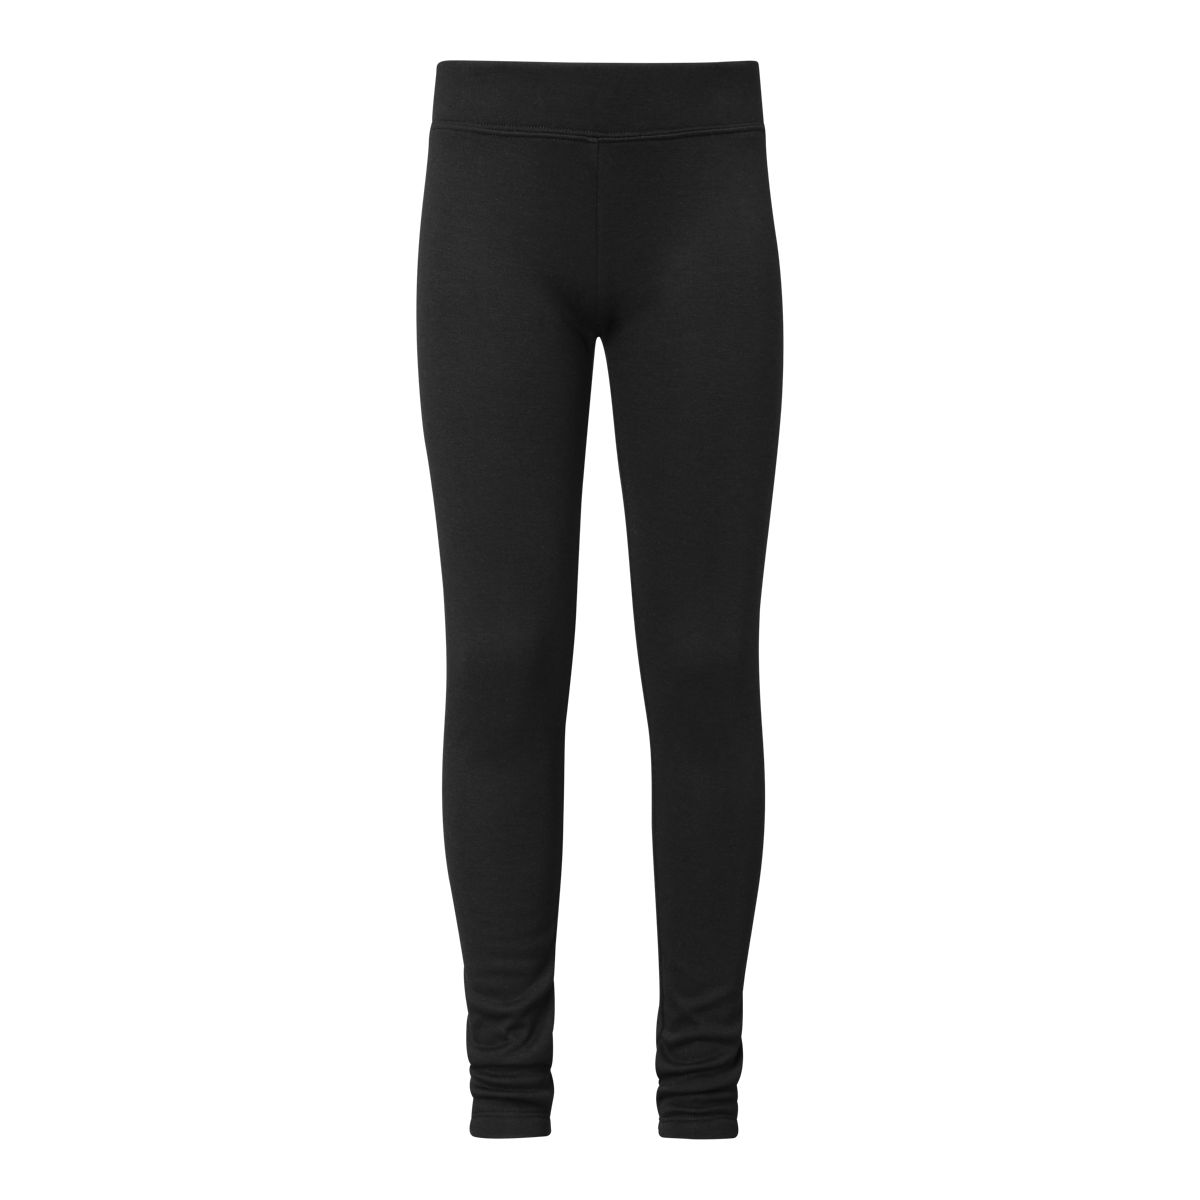 Soft Surroundings Black Slimsations Crop Leggings Size XS - $15 - From  Melissa